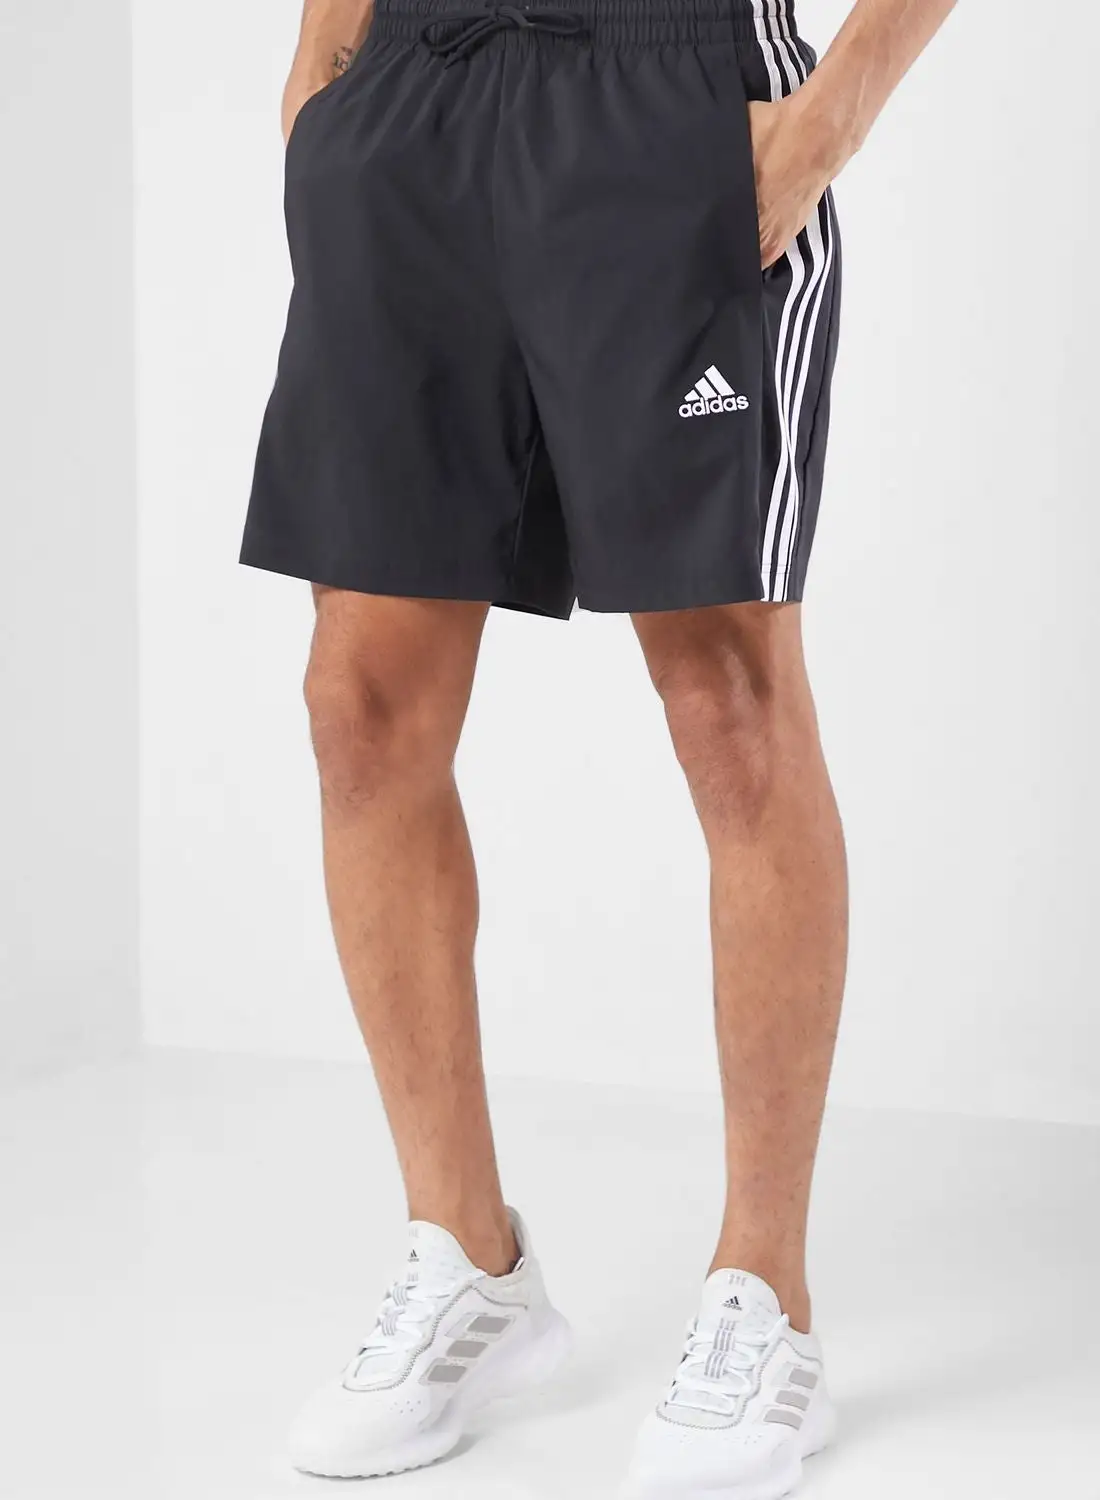 Adidas 3 Stripes Chelsea Shorts